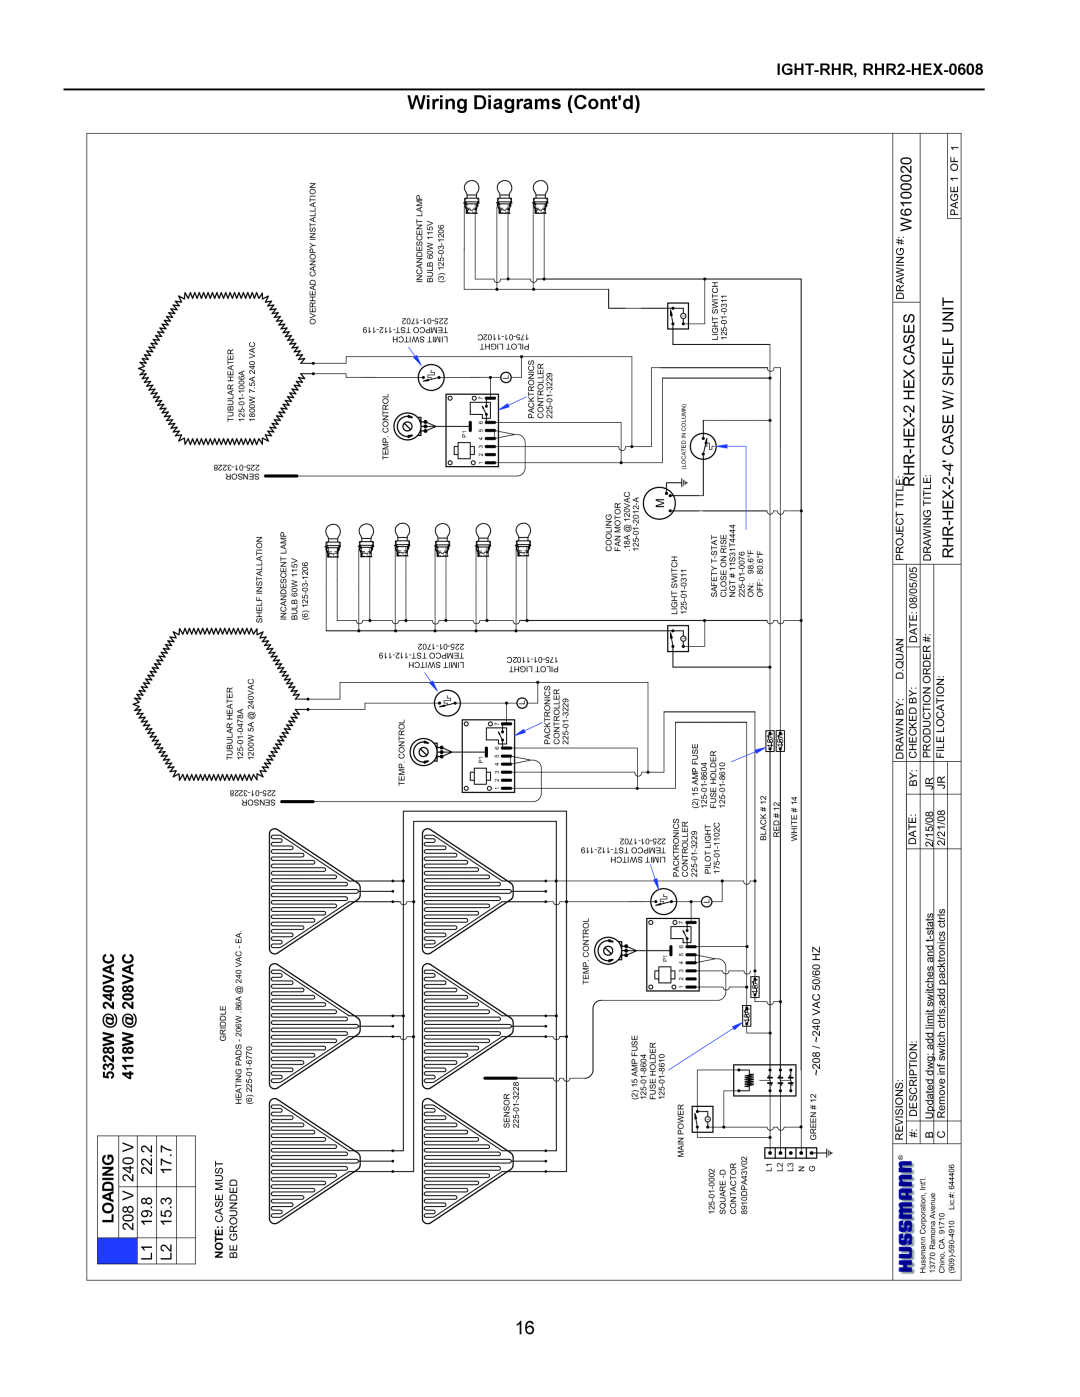 hussman rhr-hex, RHR-SQ, RHR2-HEX, RHR 1/2 HEX operation manual Wiring Diagrams Contd, Loading, HEX-0608 